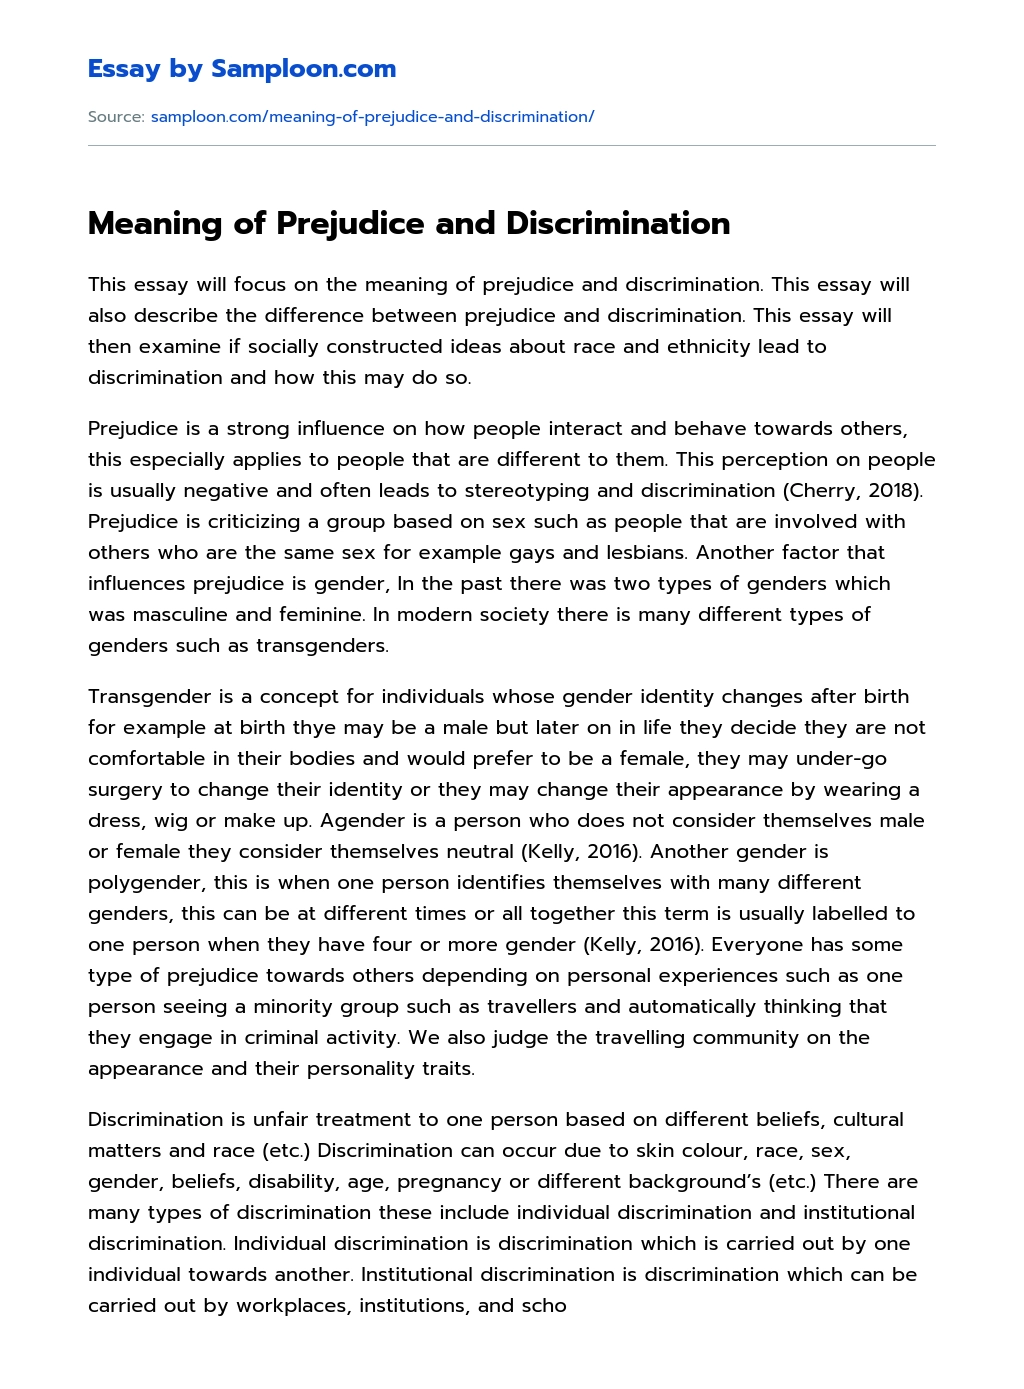 argumentative essay about prejudice